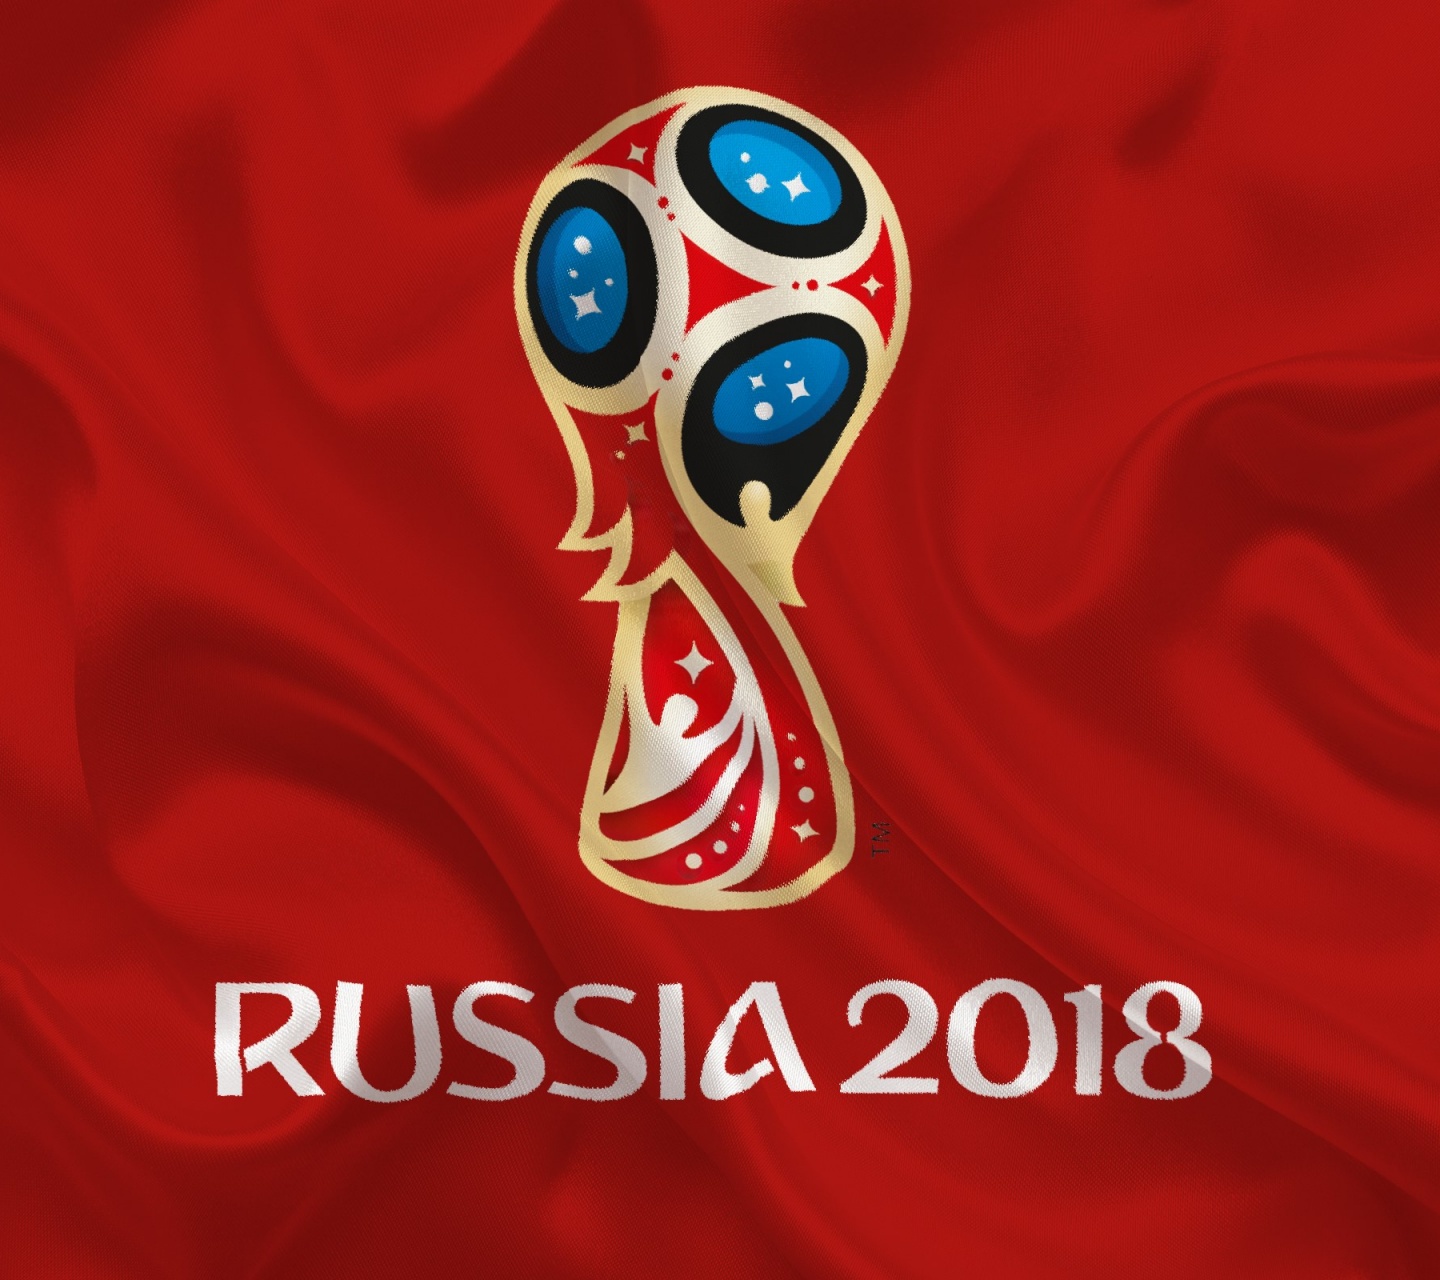 2018 Fifa World Cup Russia